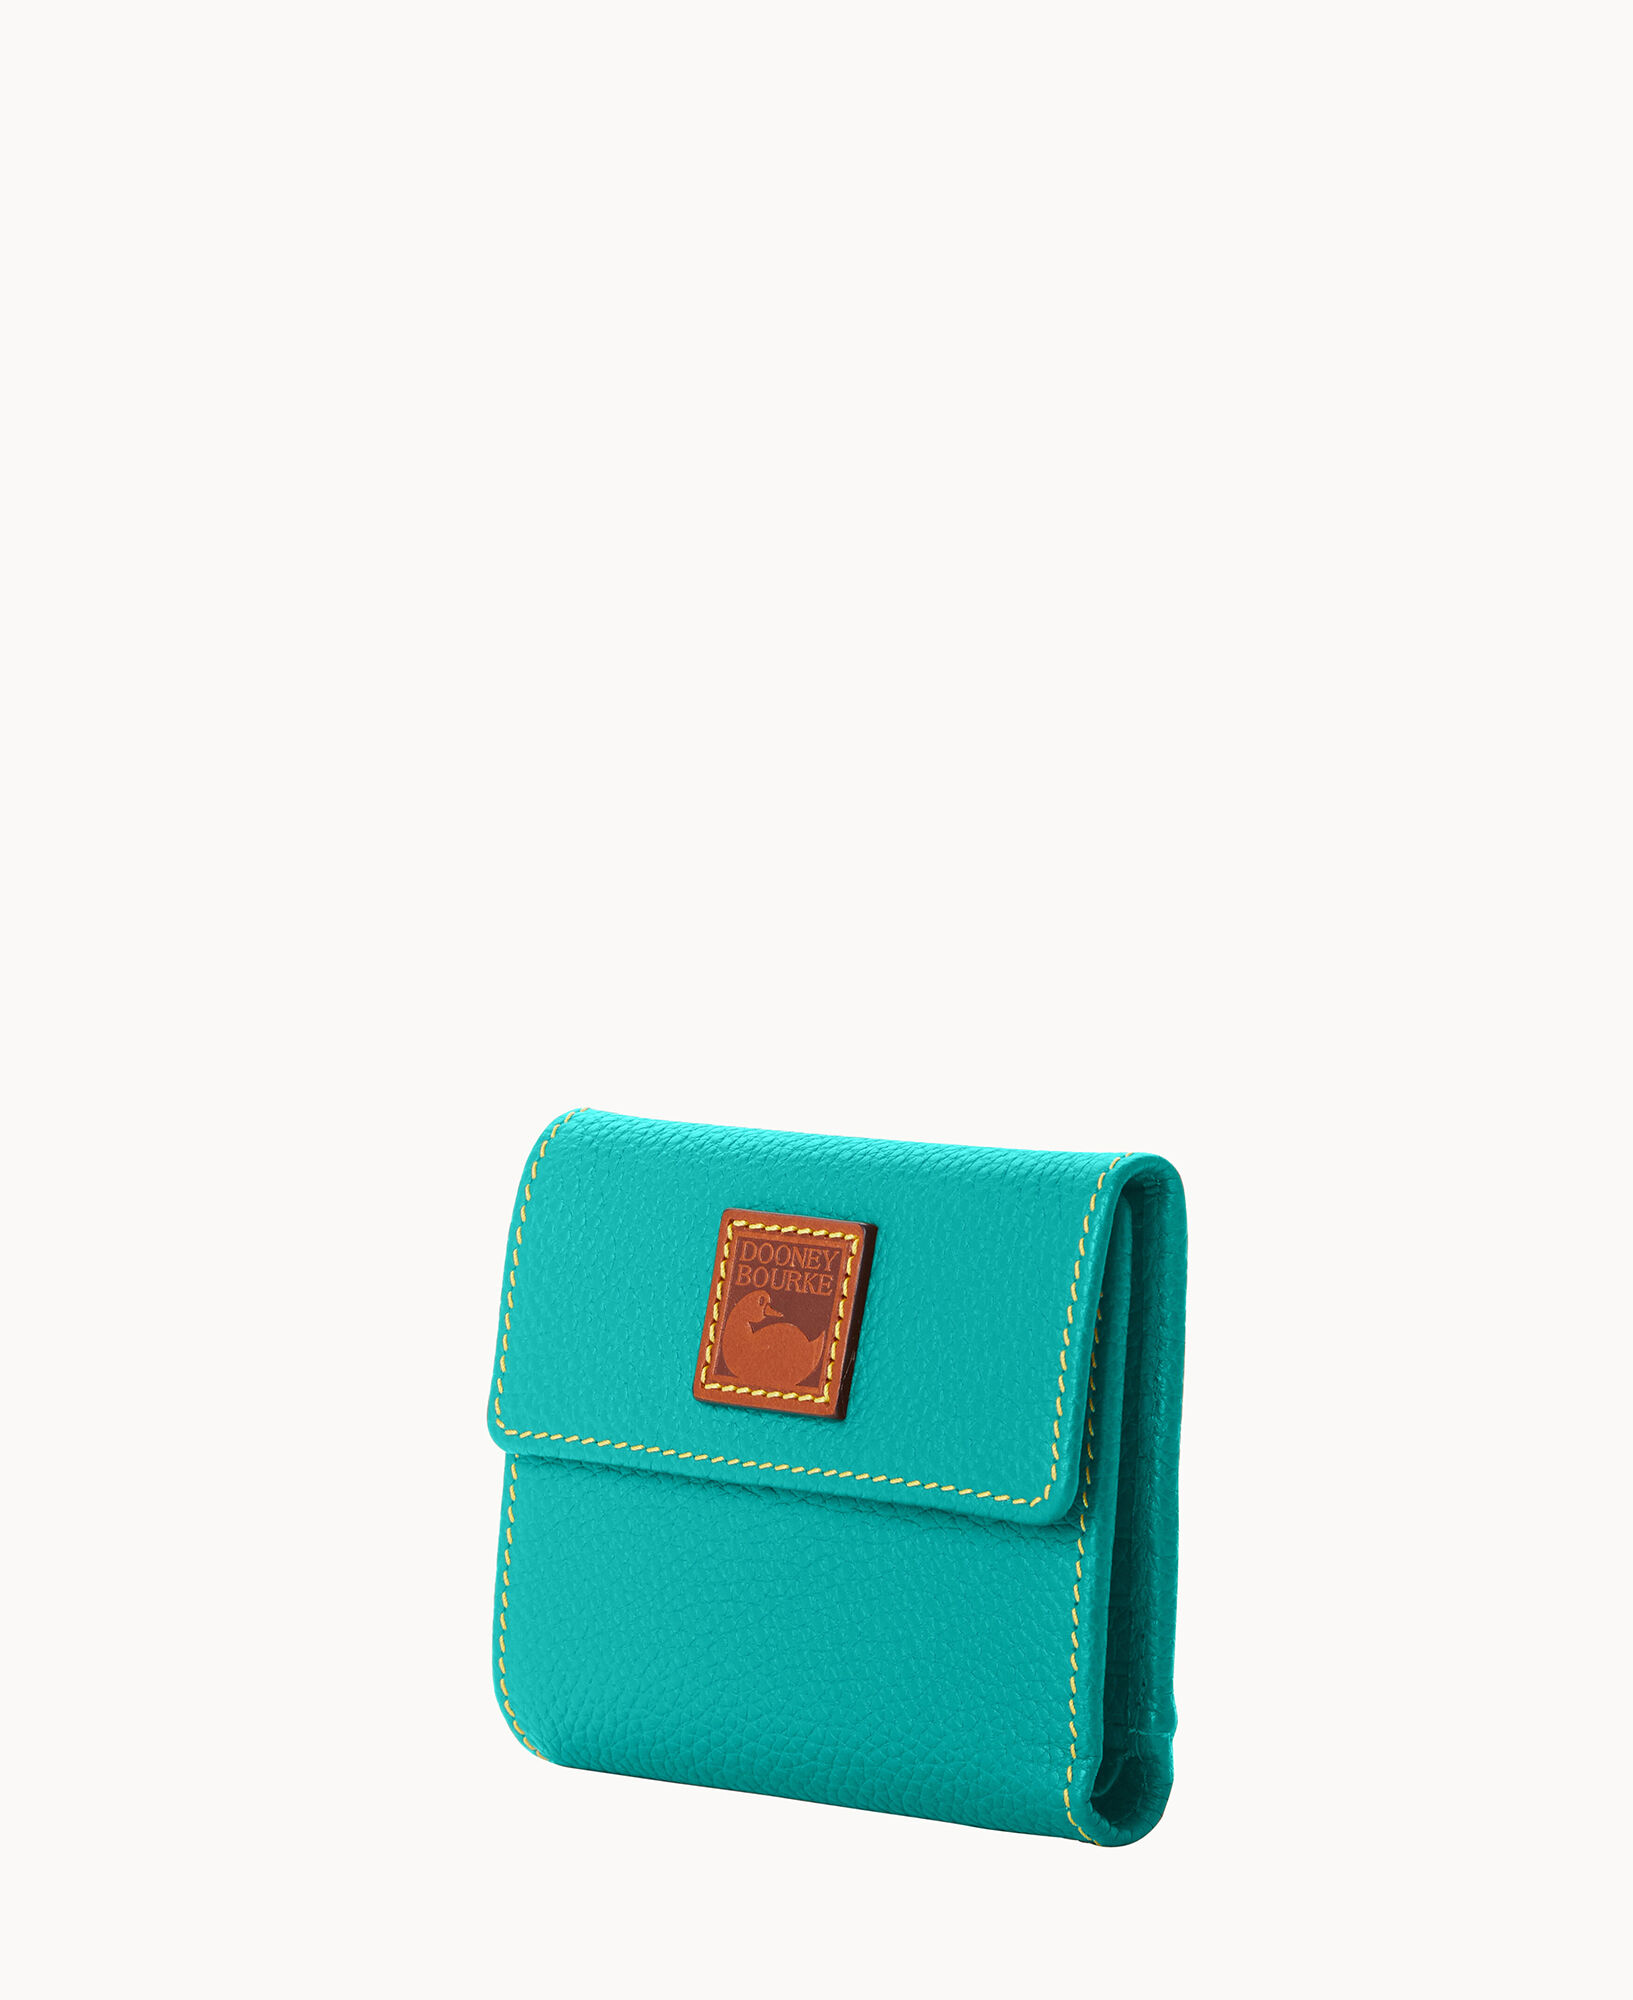 Dooney & Bourke Saffiano Small Flap Credit Card Wallet